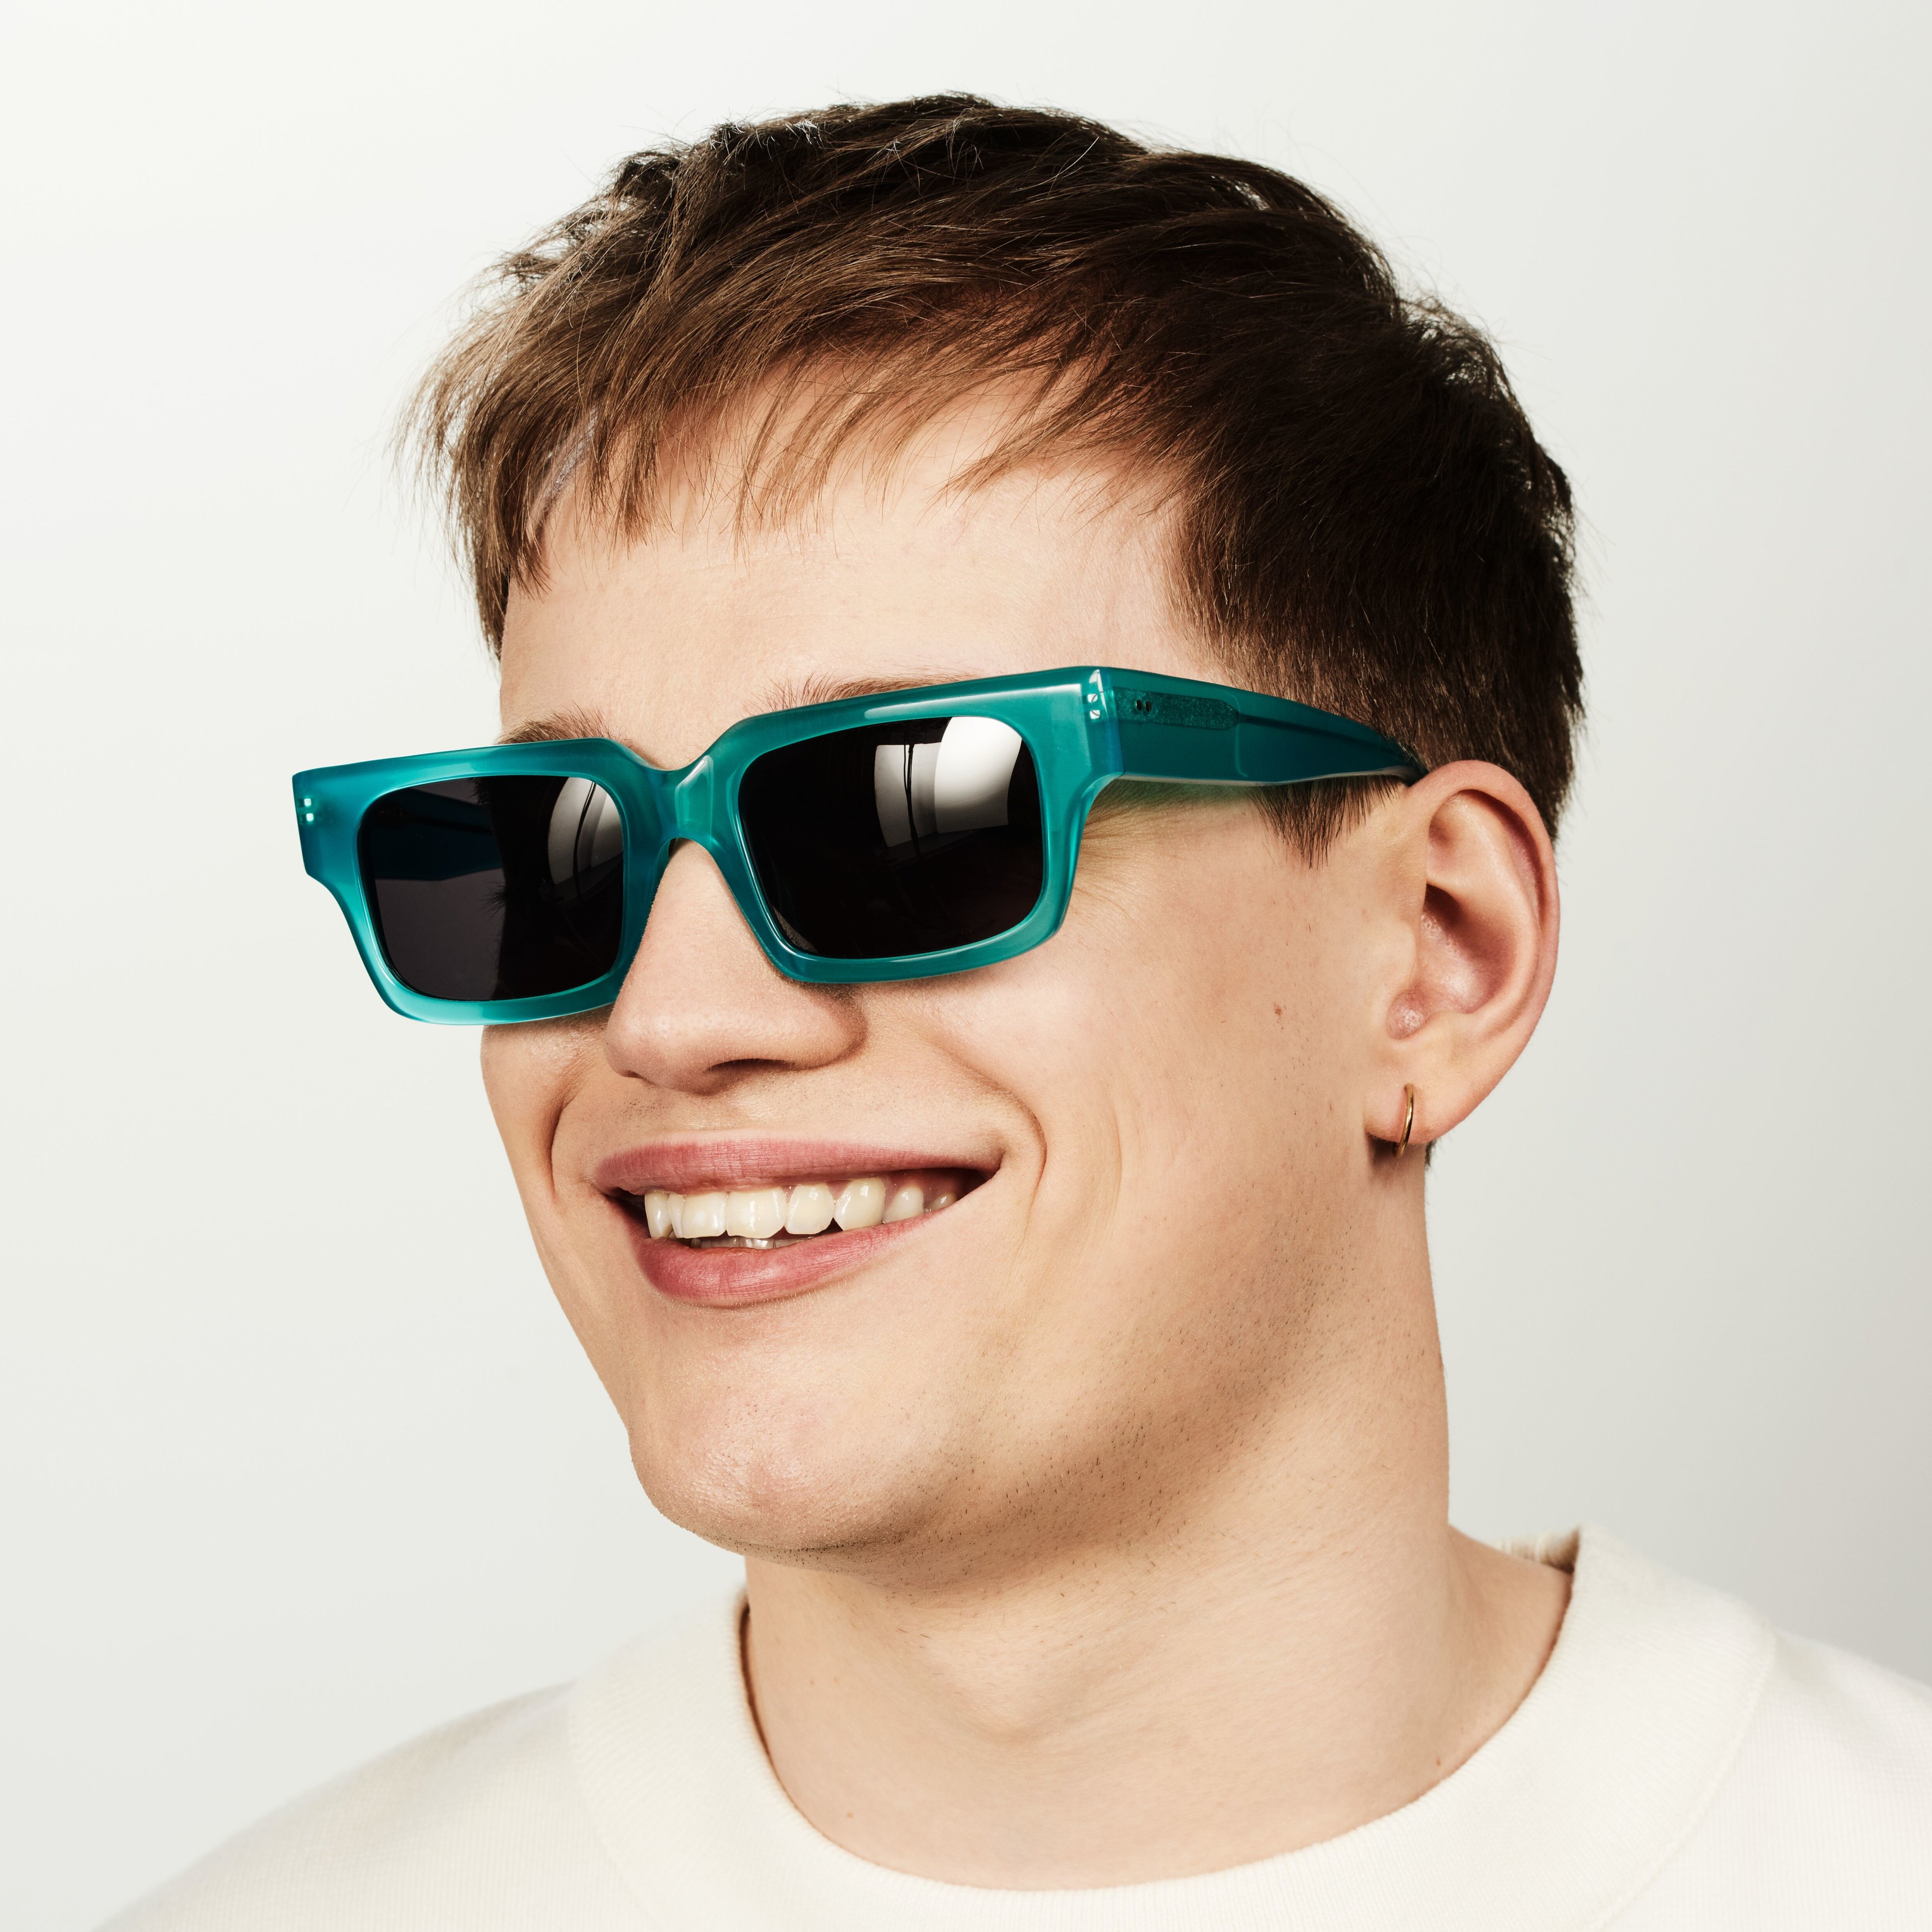 Ace & Tate Sunglasses | rectangle Acetate in Blue, Green